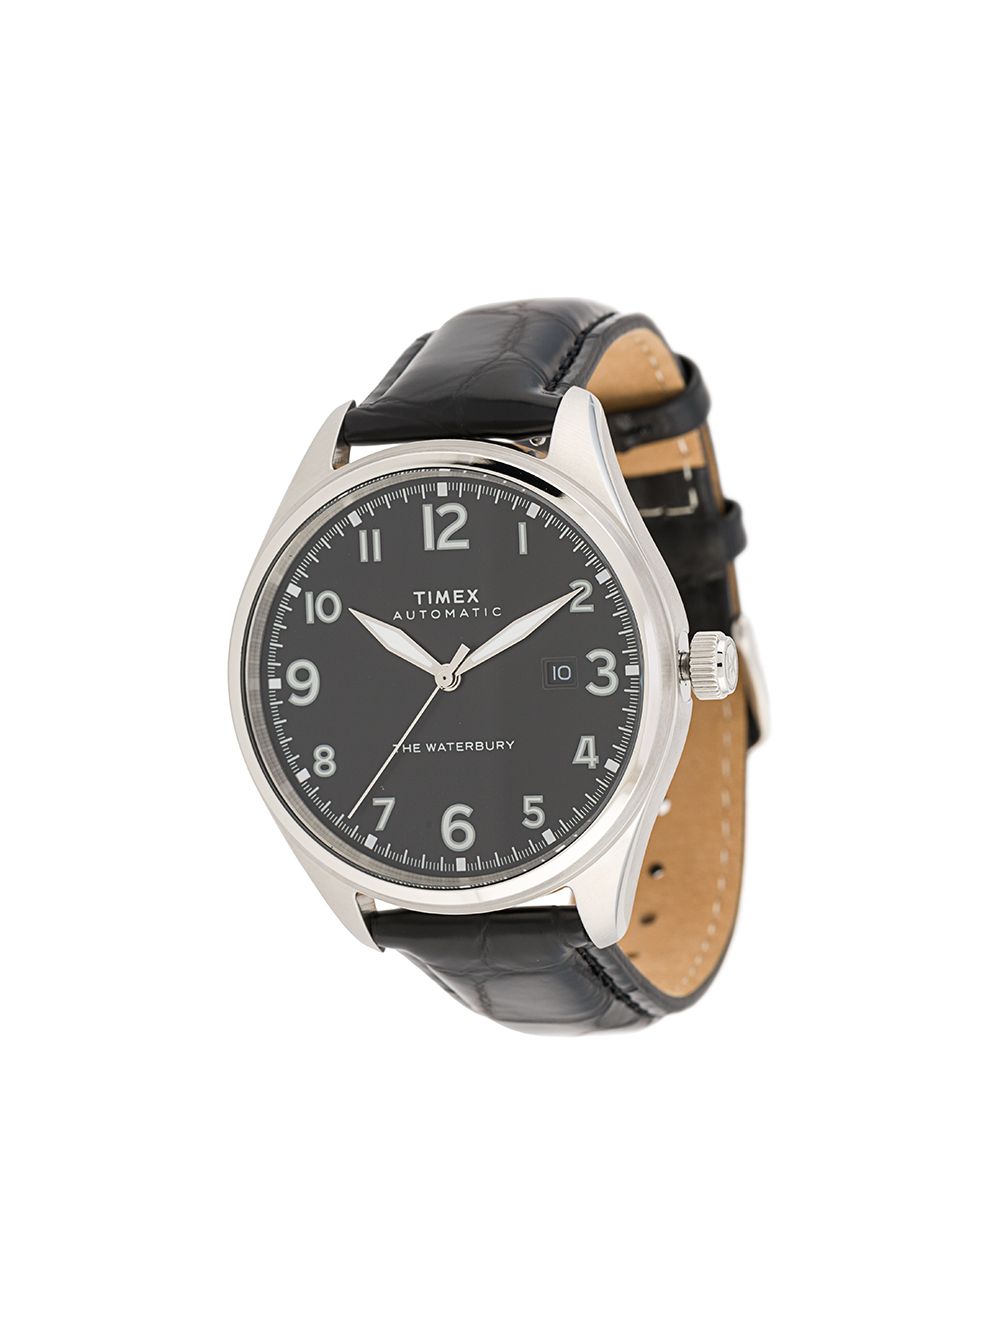 TIMEX наручные часы Waterbury Traditional Automatic 42 мм